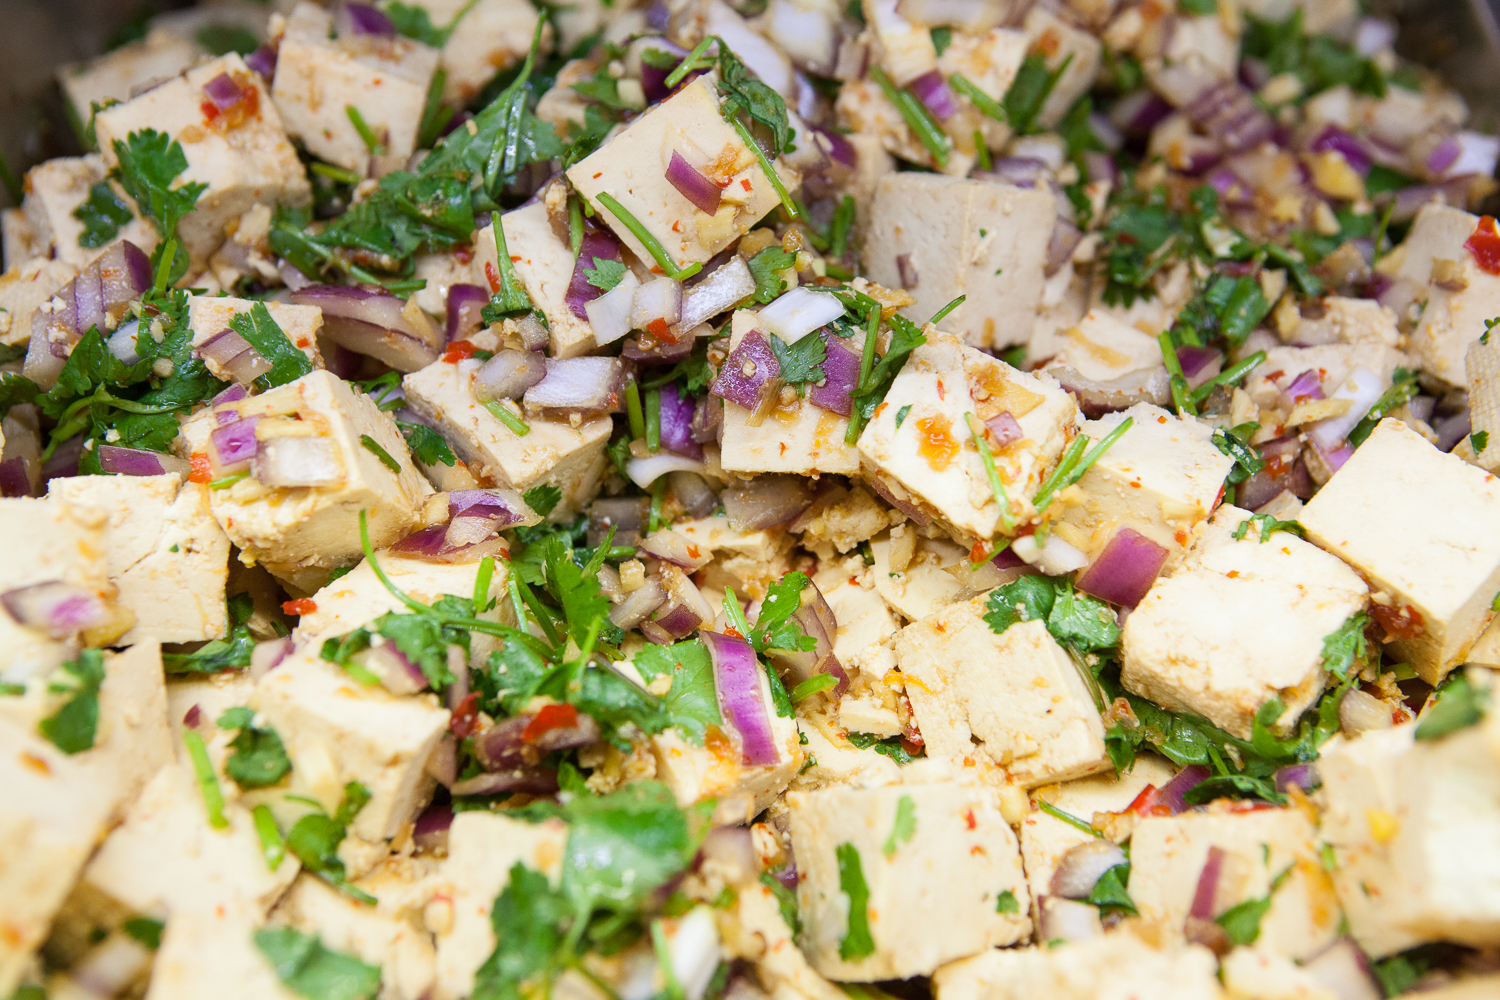  fresh-organic-tofu-salad-prepared-by-mana-foods-deli 